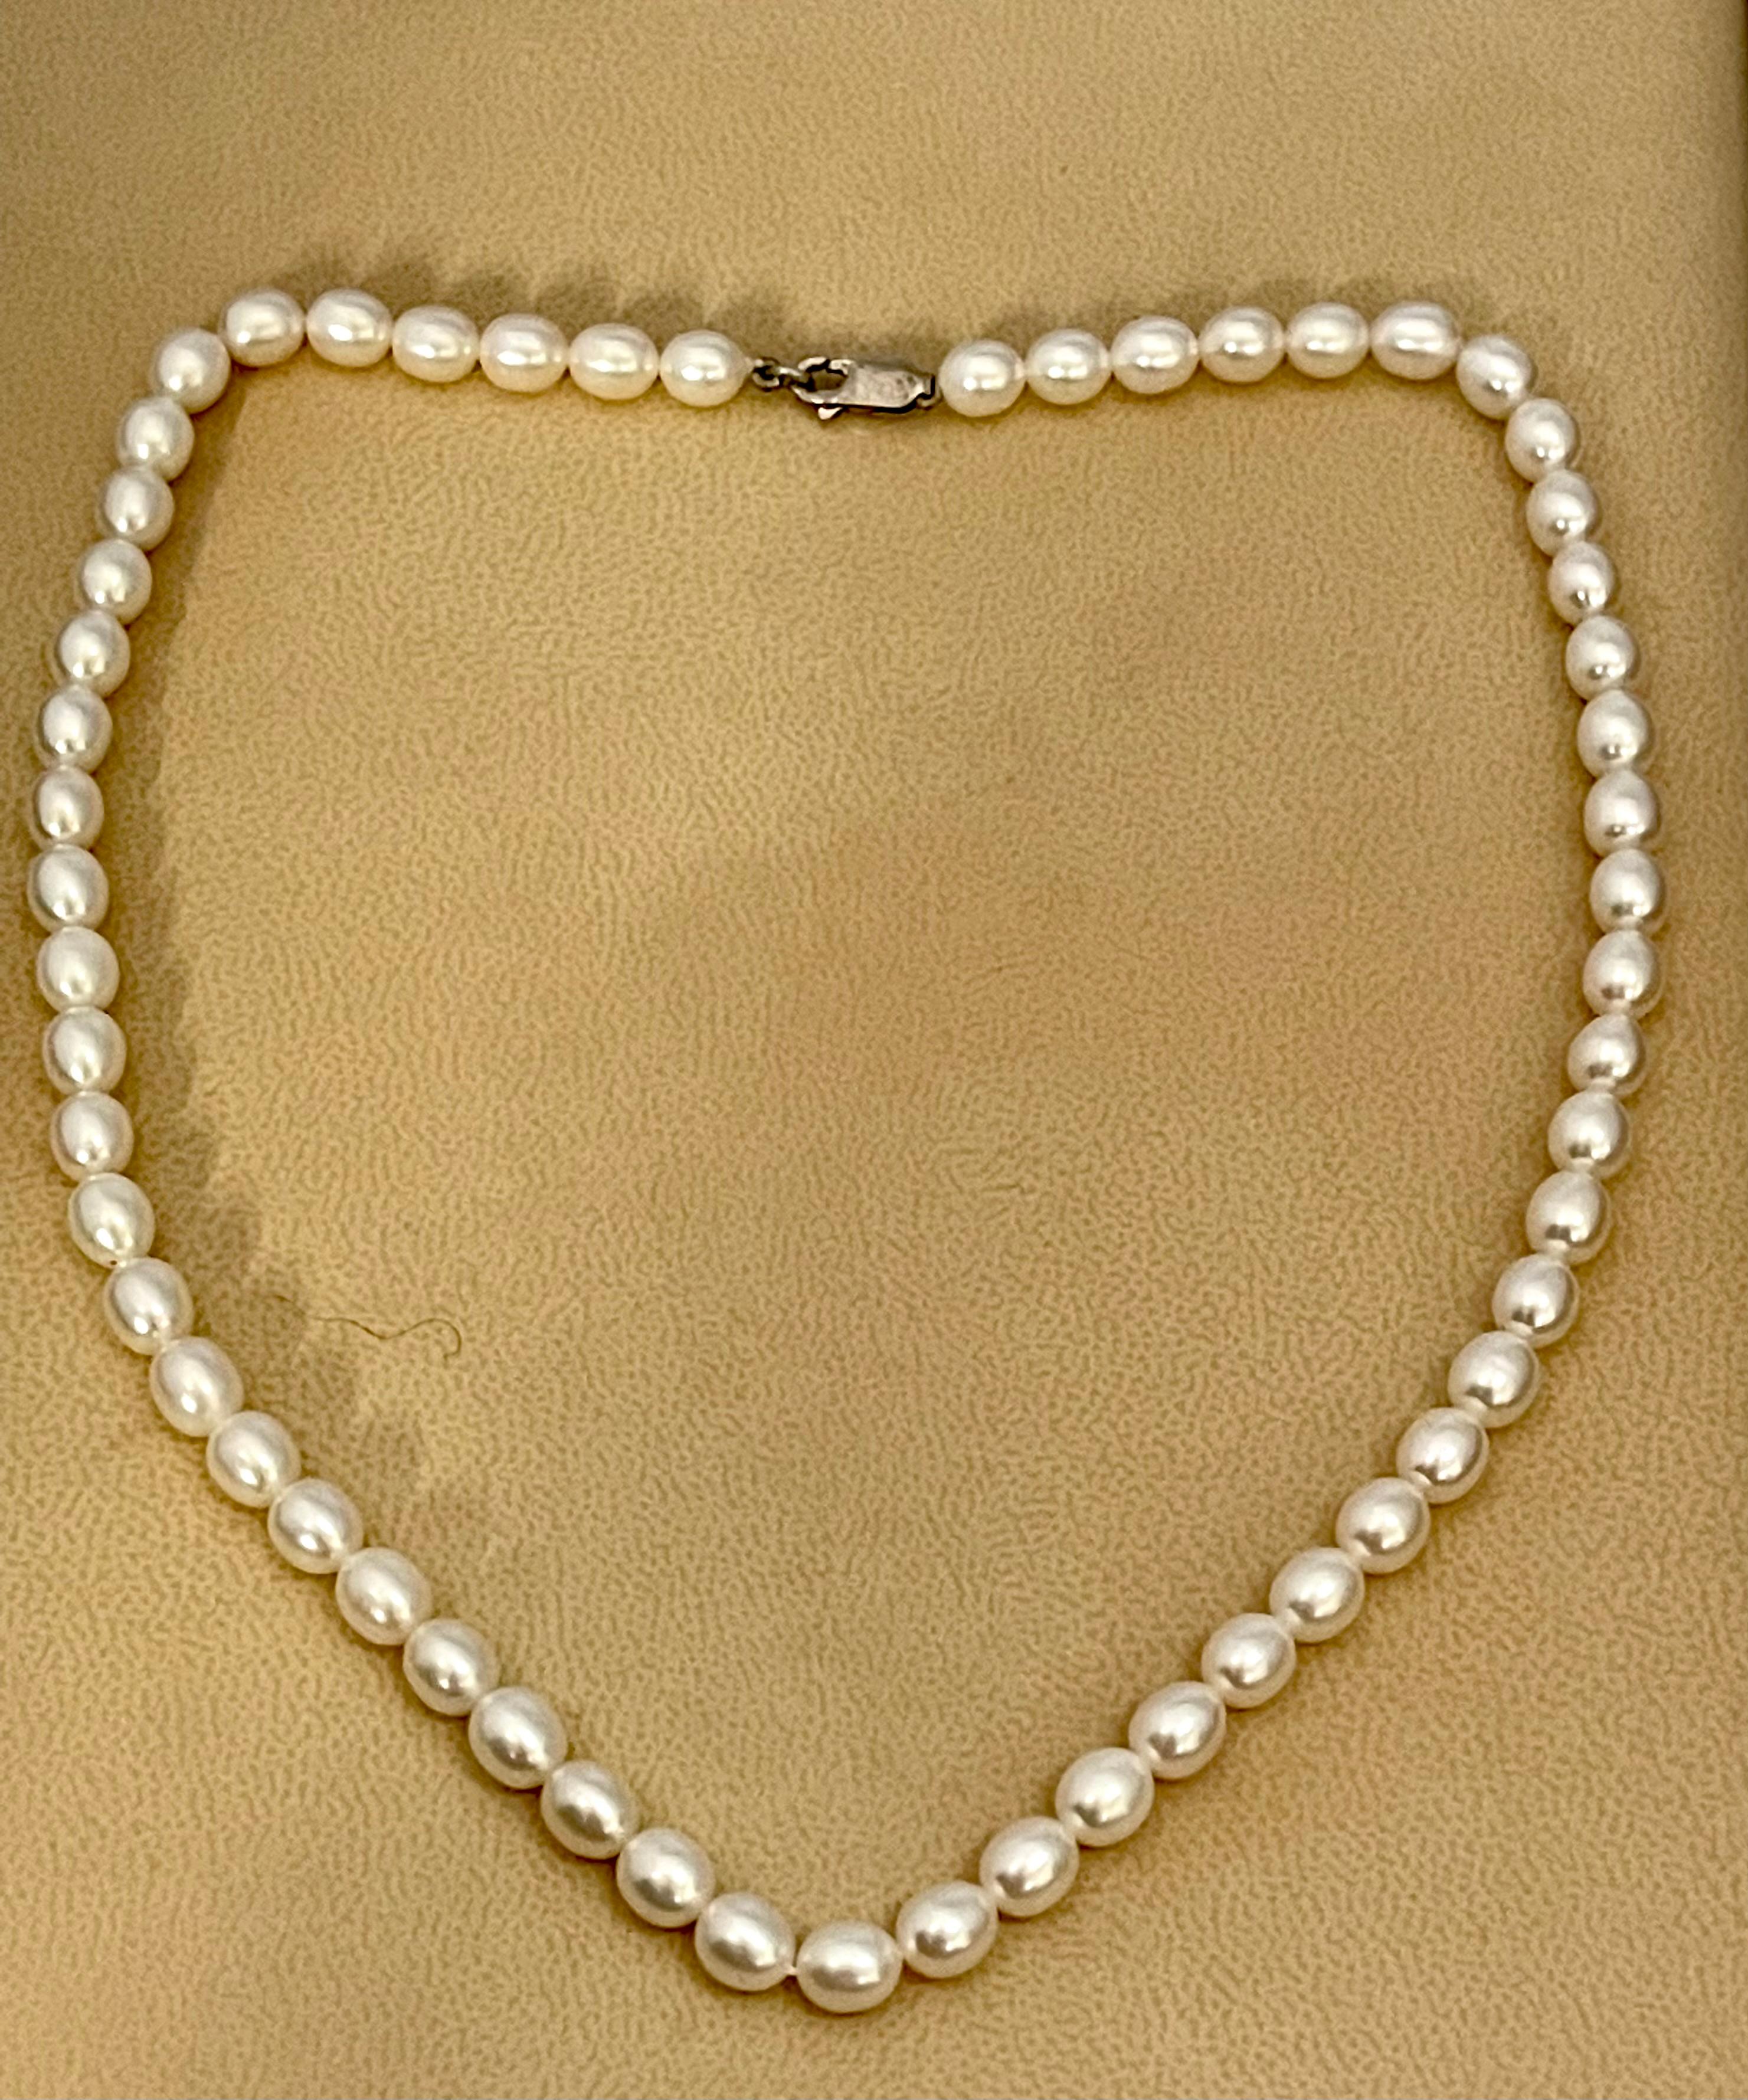 elongated pearls